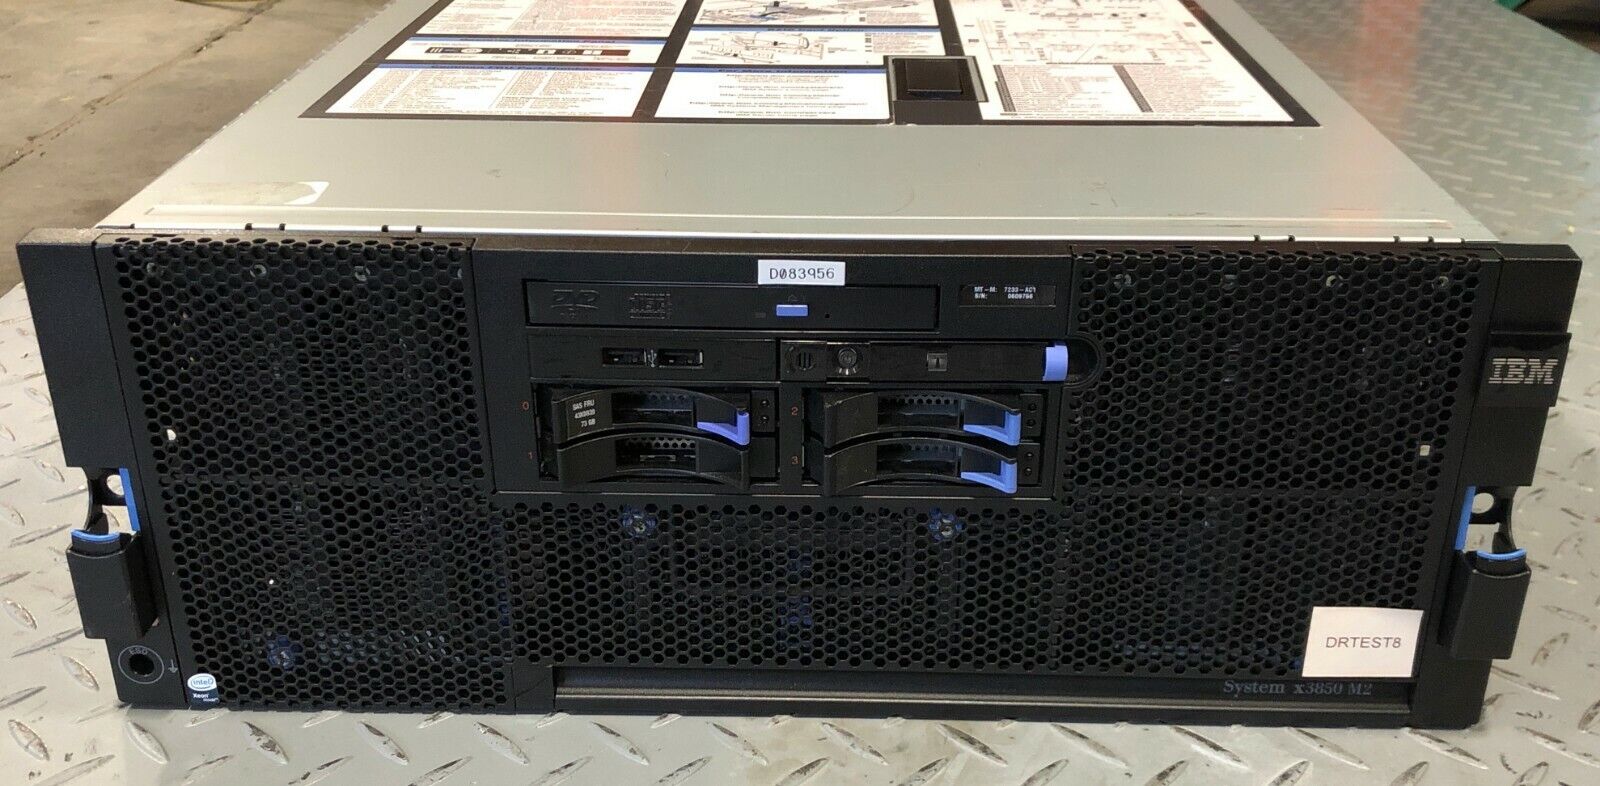 IBM X3850 M2 4x SIX-CORE XEON E7450 2.4GHz 128GB RAM 1x 73GB RAID Rack Server